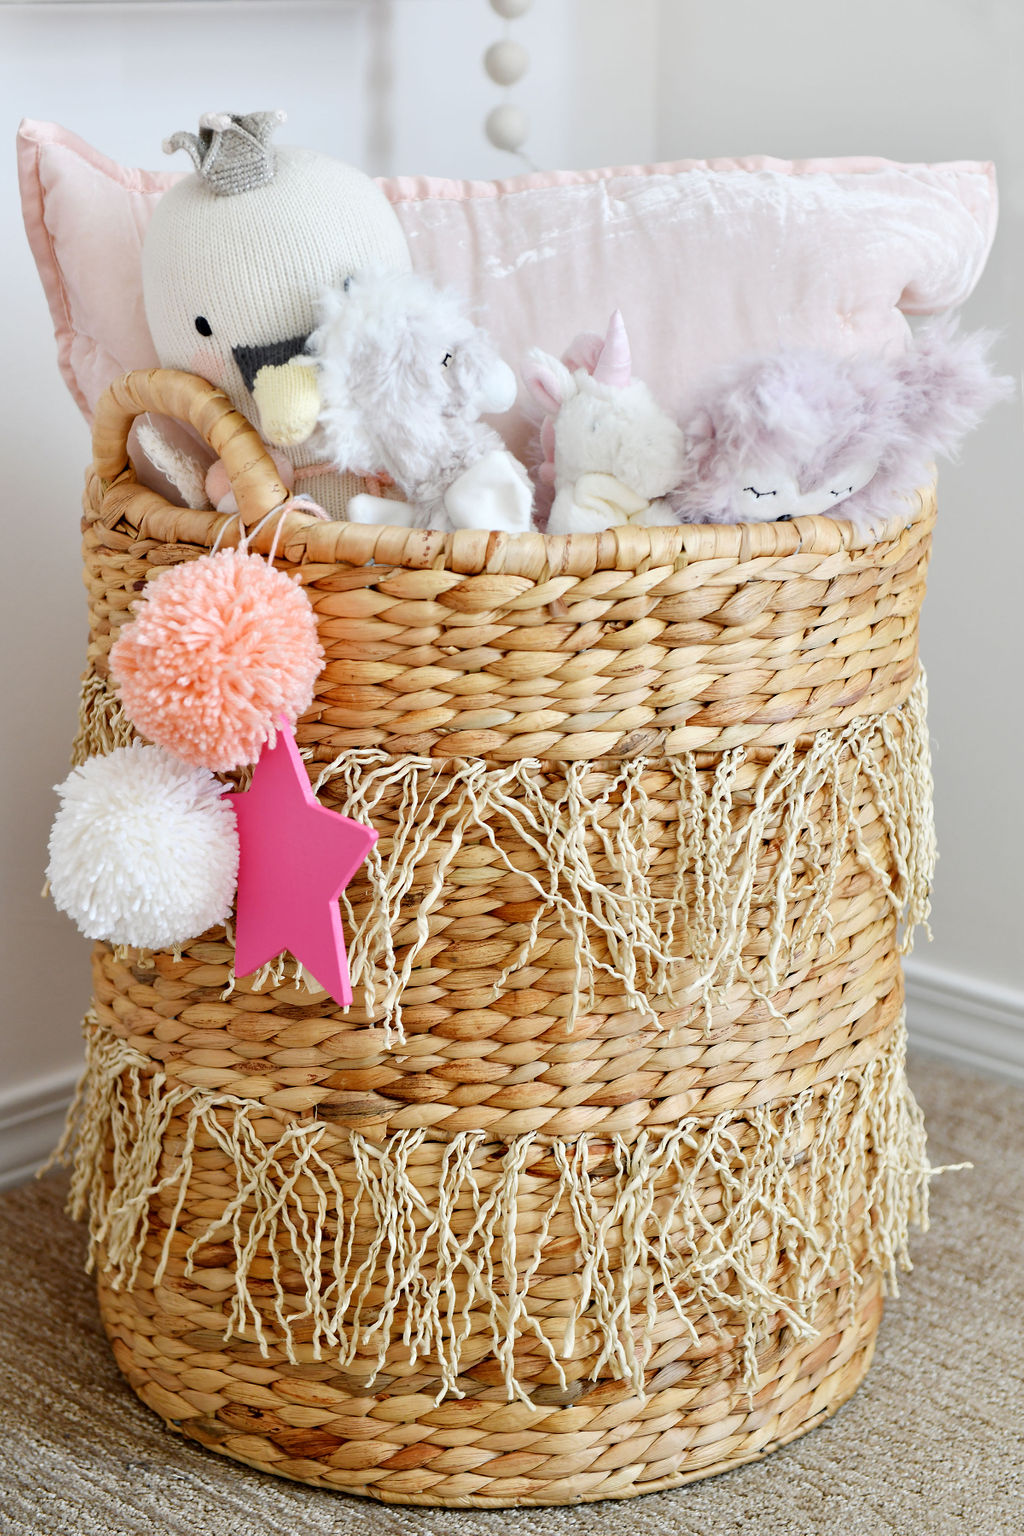 Stuffed Animal Storage in Girl's Room with Pom Pom Accent